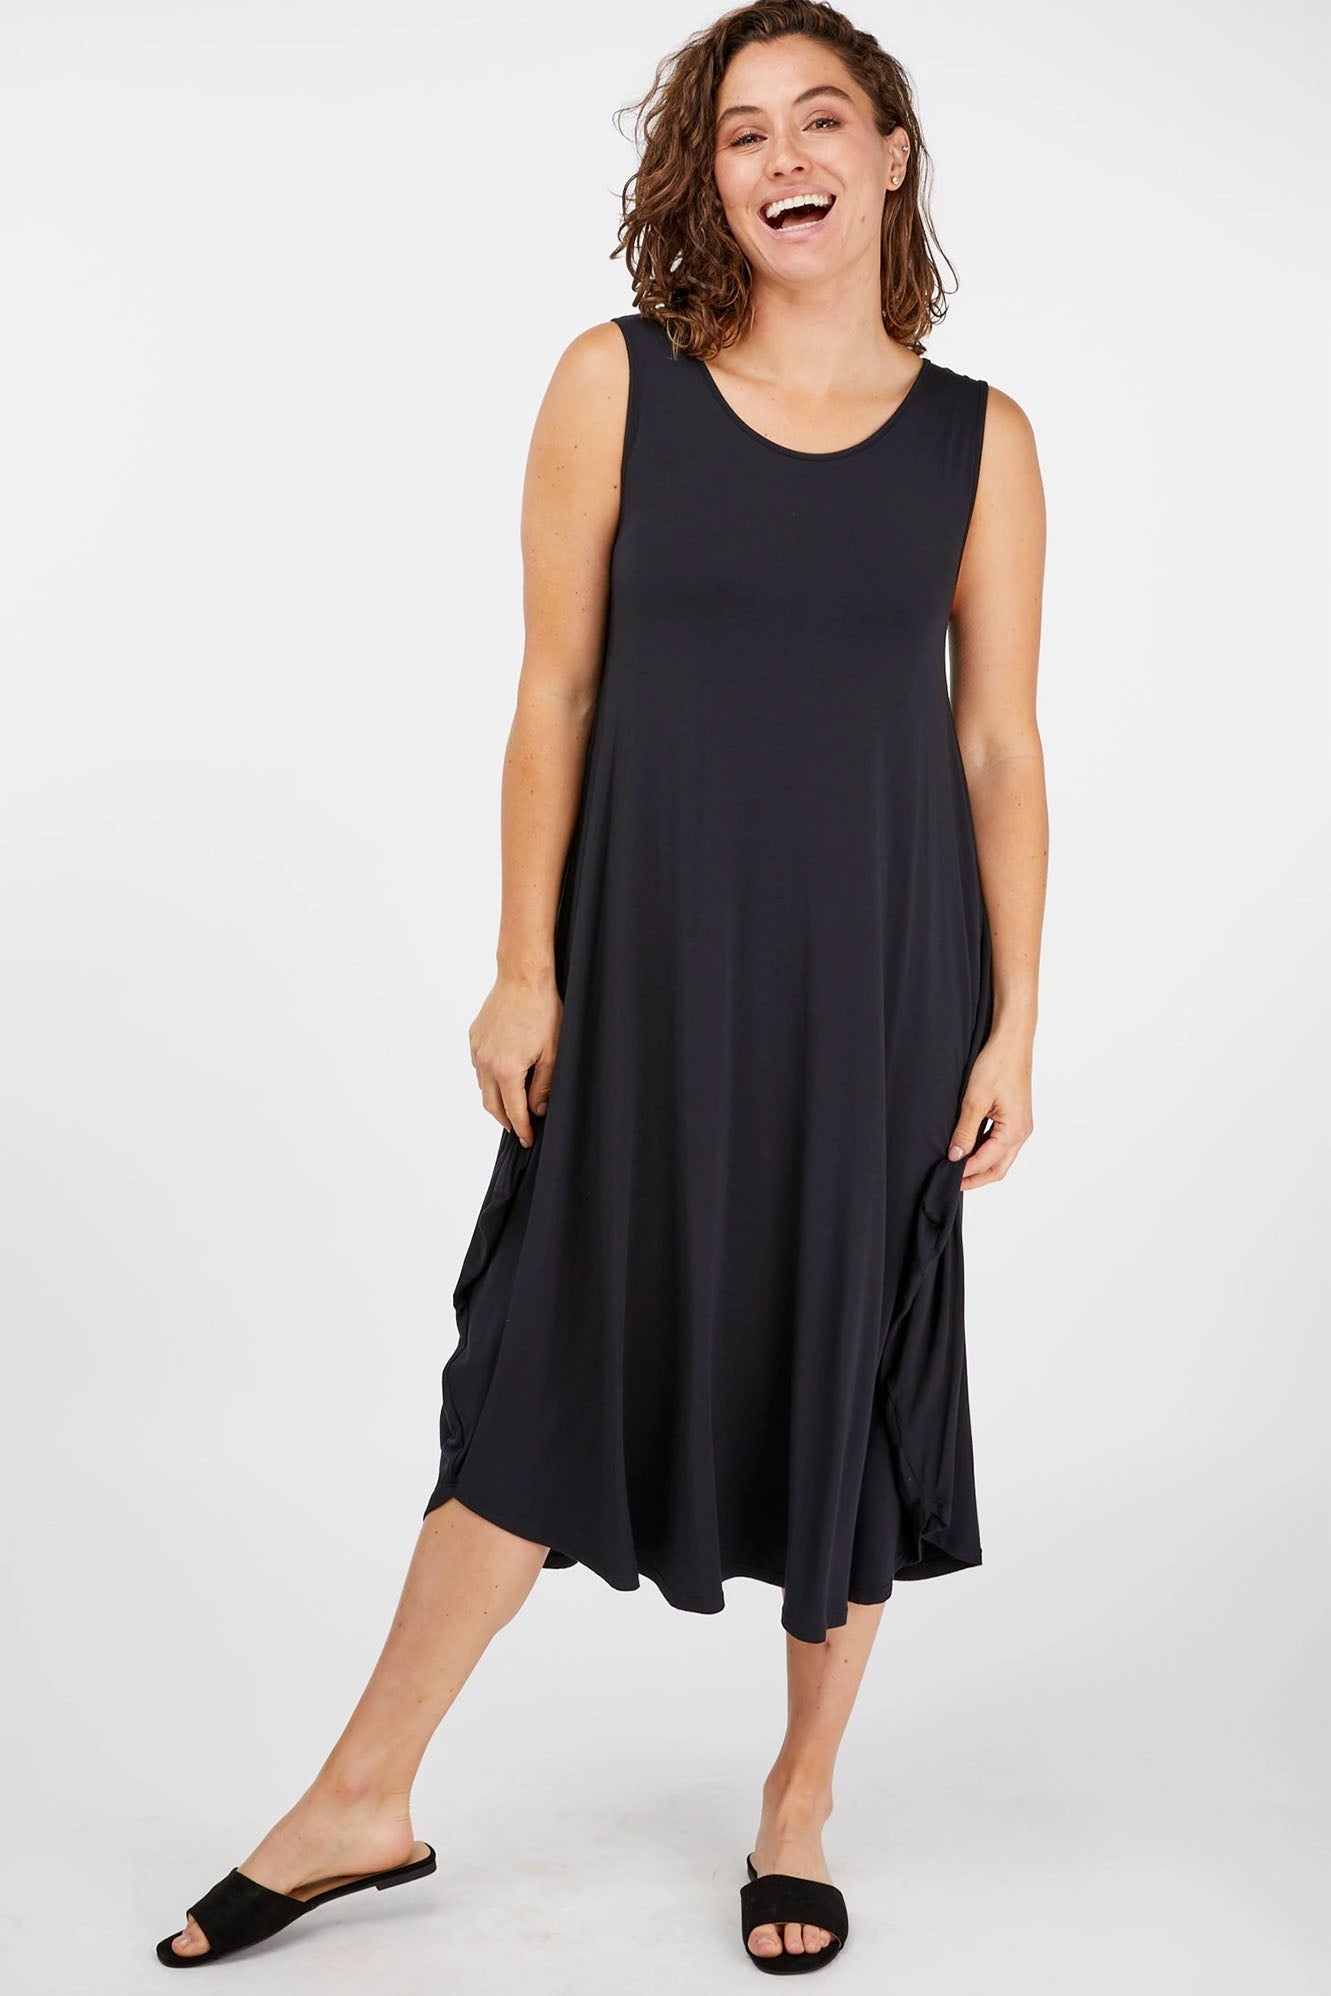 Woman wearing black Tani Sleeveless Tri Dress 79432